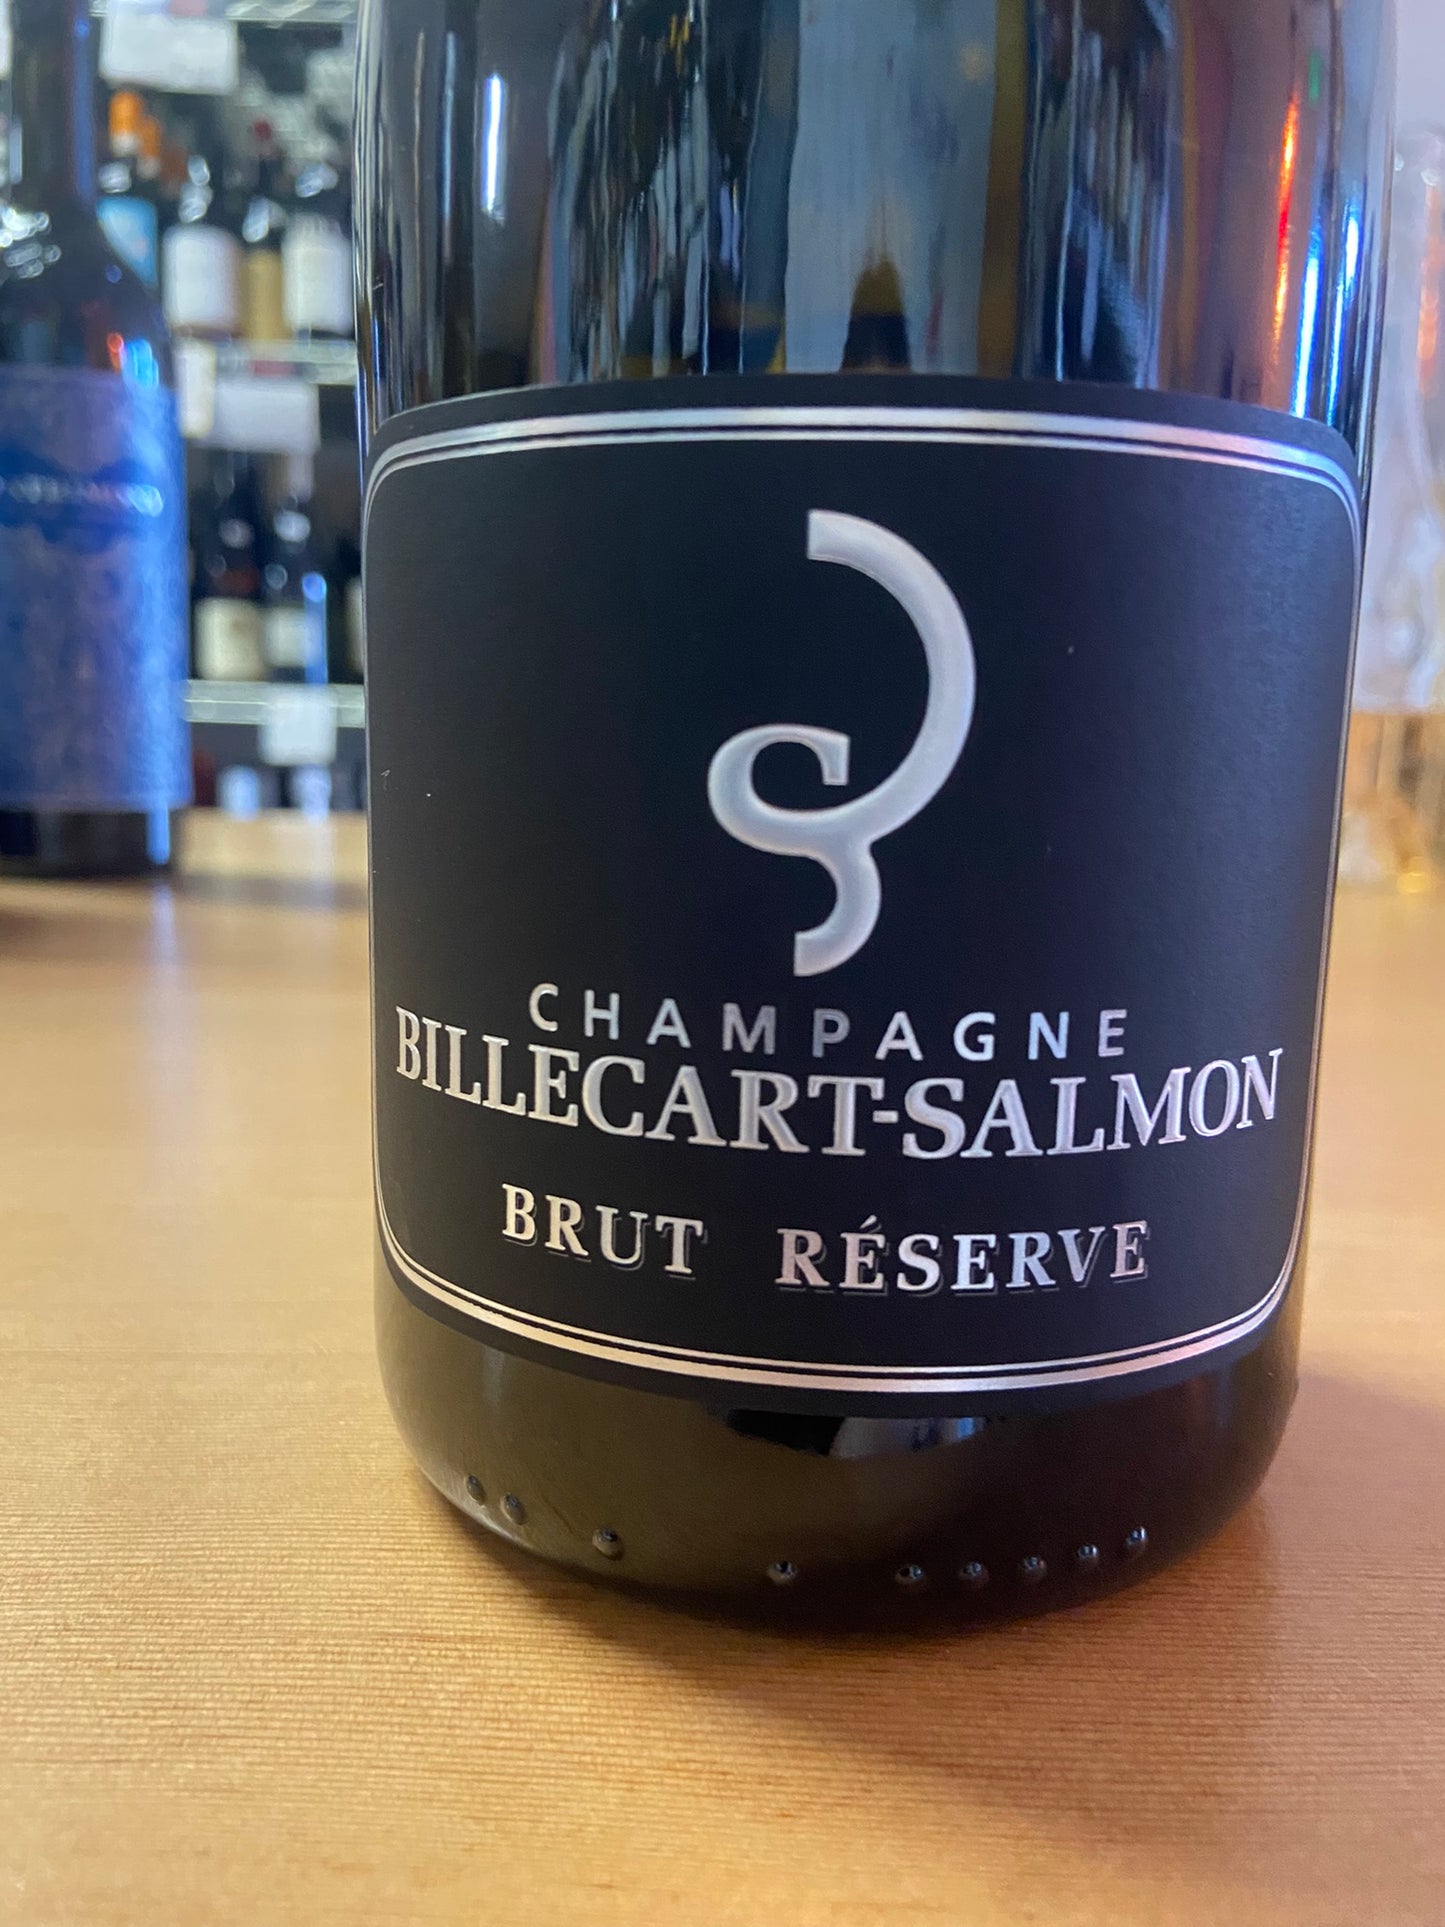 BILLIECART-SALMON NV Champagne 'Brut Reserve' (Champagne, France)